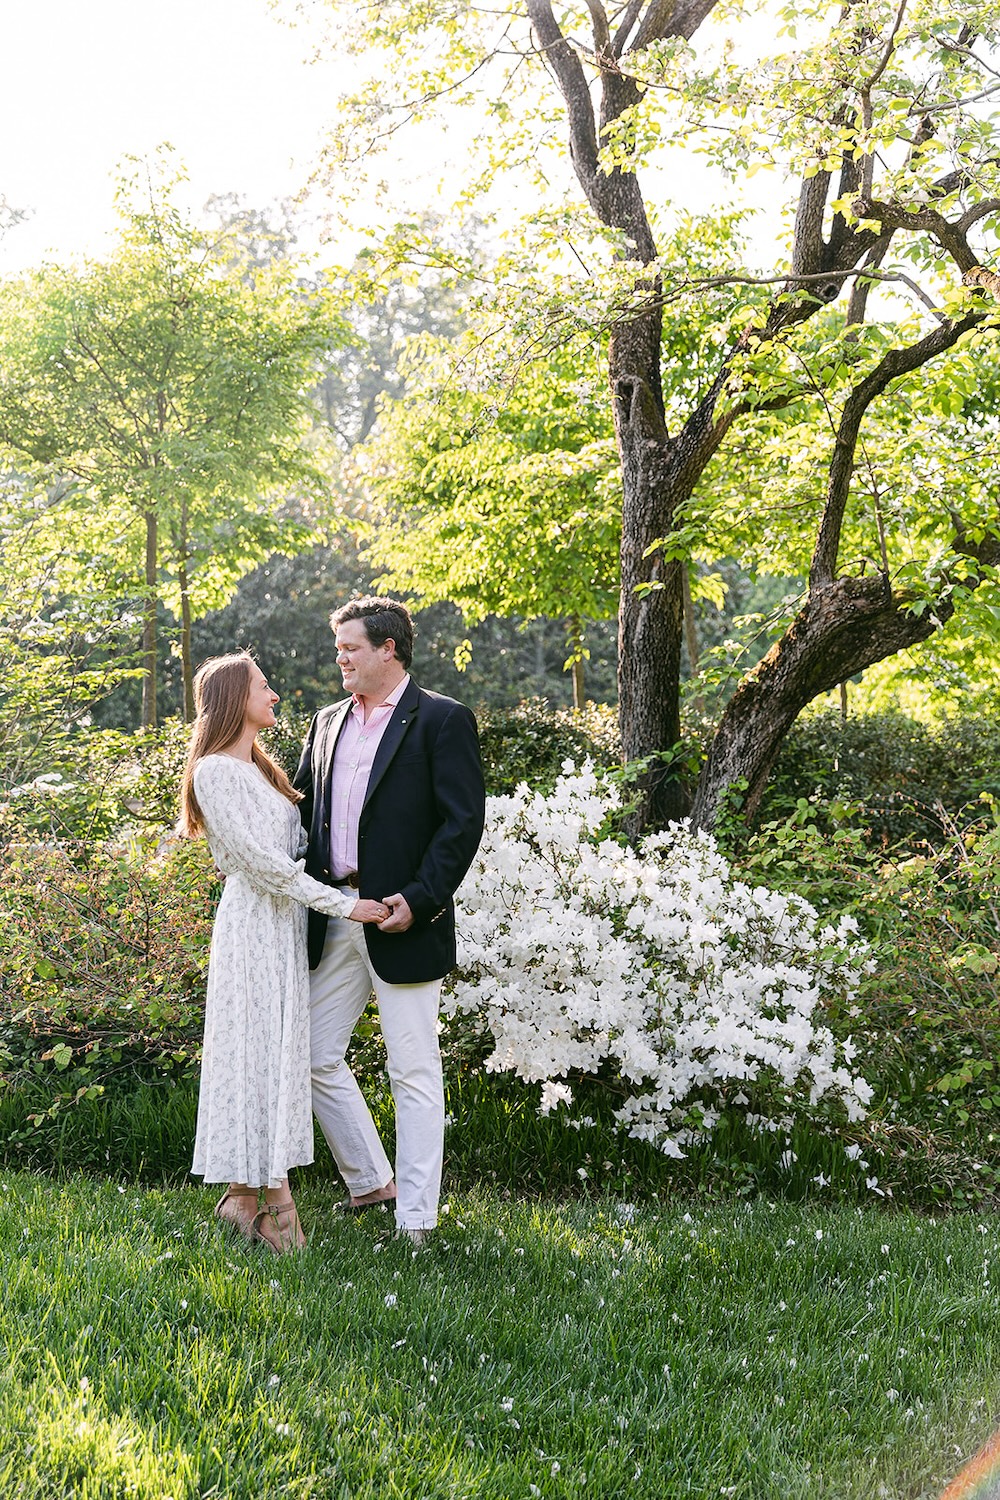 Springtime wedding engagement photo session in DC gardens. Sarah Bradshaw Photography.